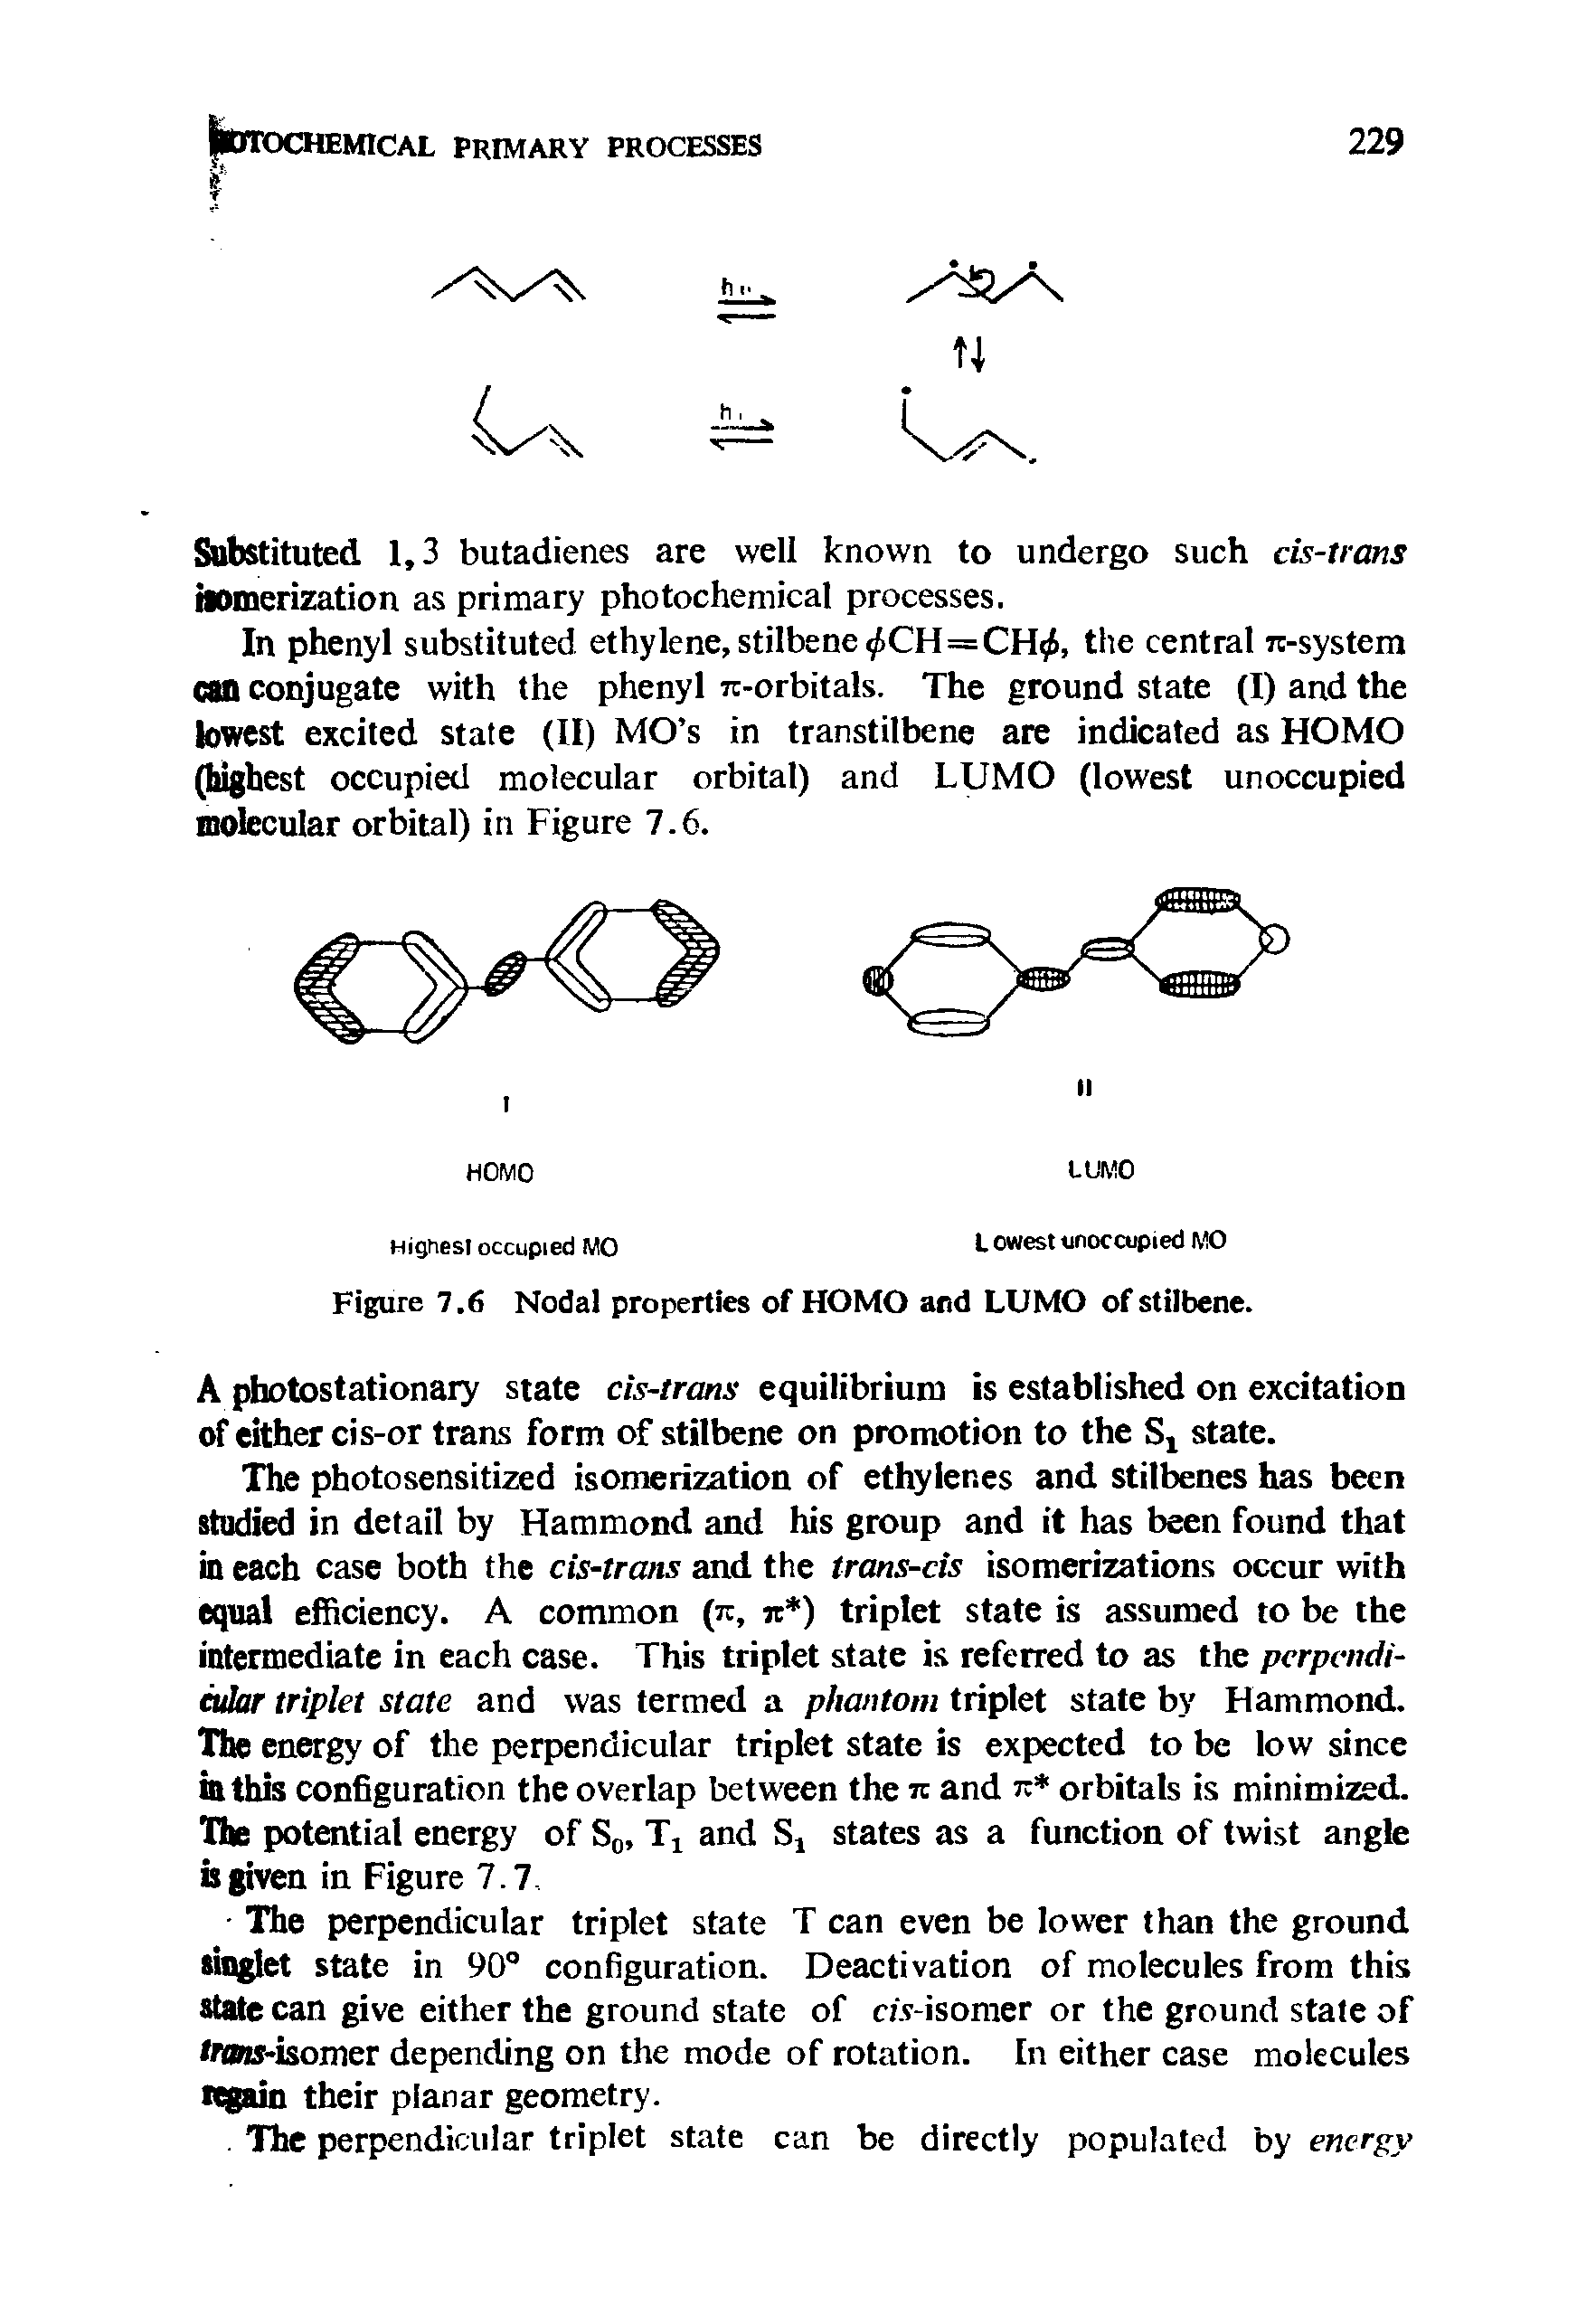 Figure 7.6 Nodal properties of HOMO and LUMO of stilbene.